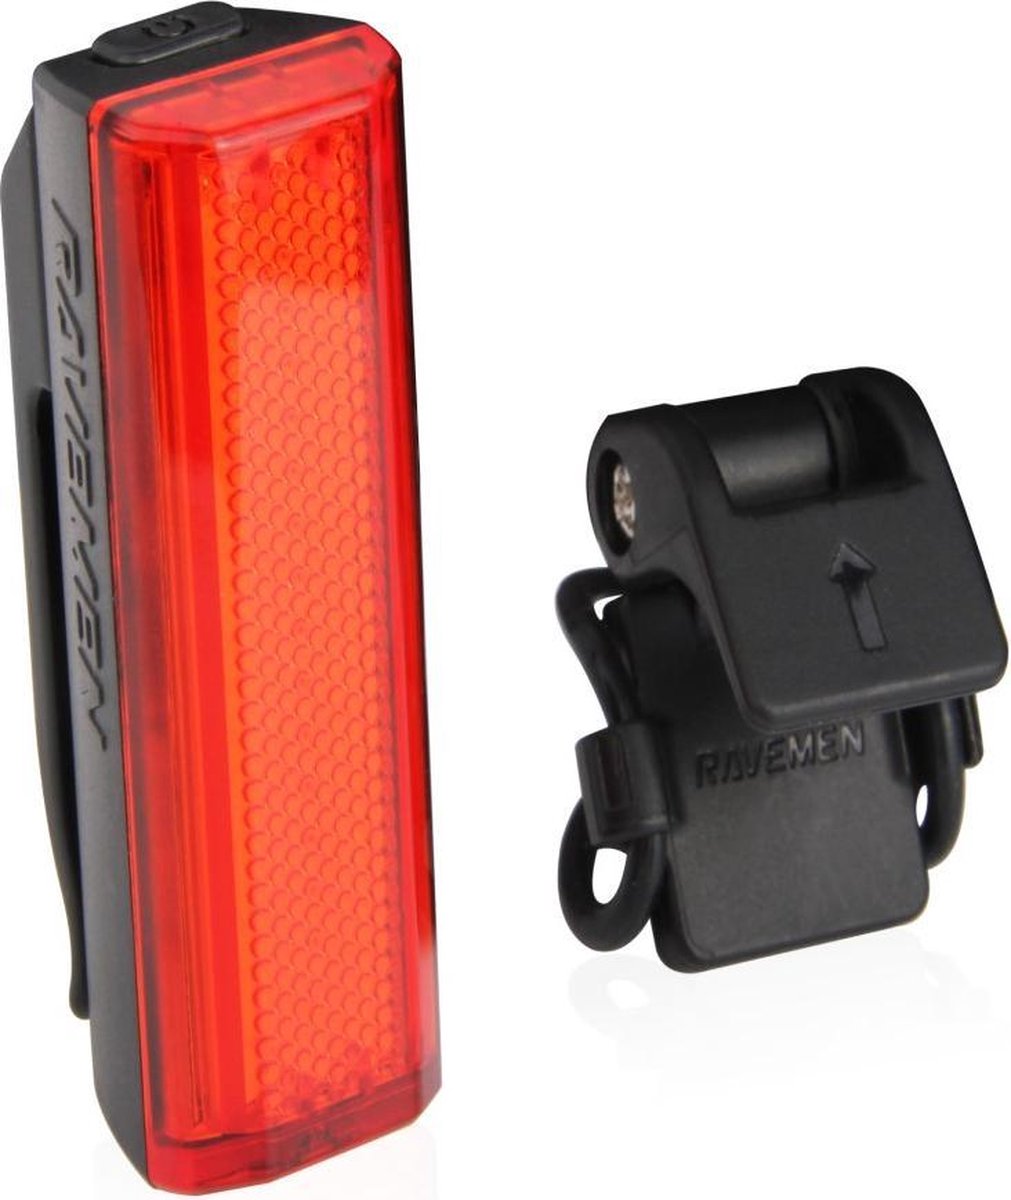 Ravemen TR20 fiets achterlicht USB oplaadbaar – 20 lumen